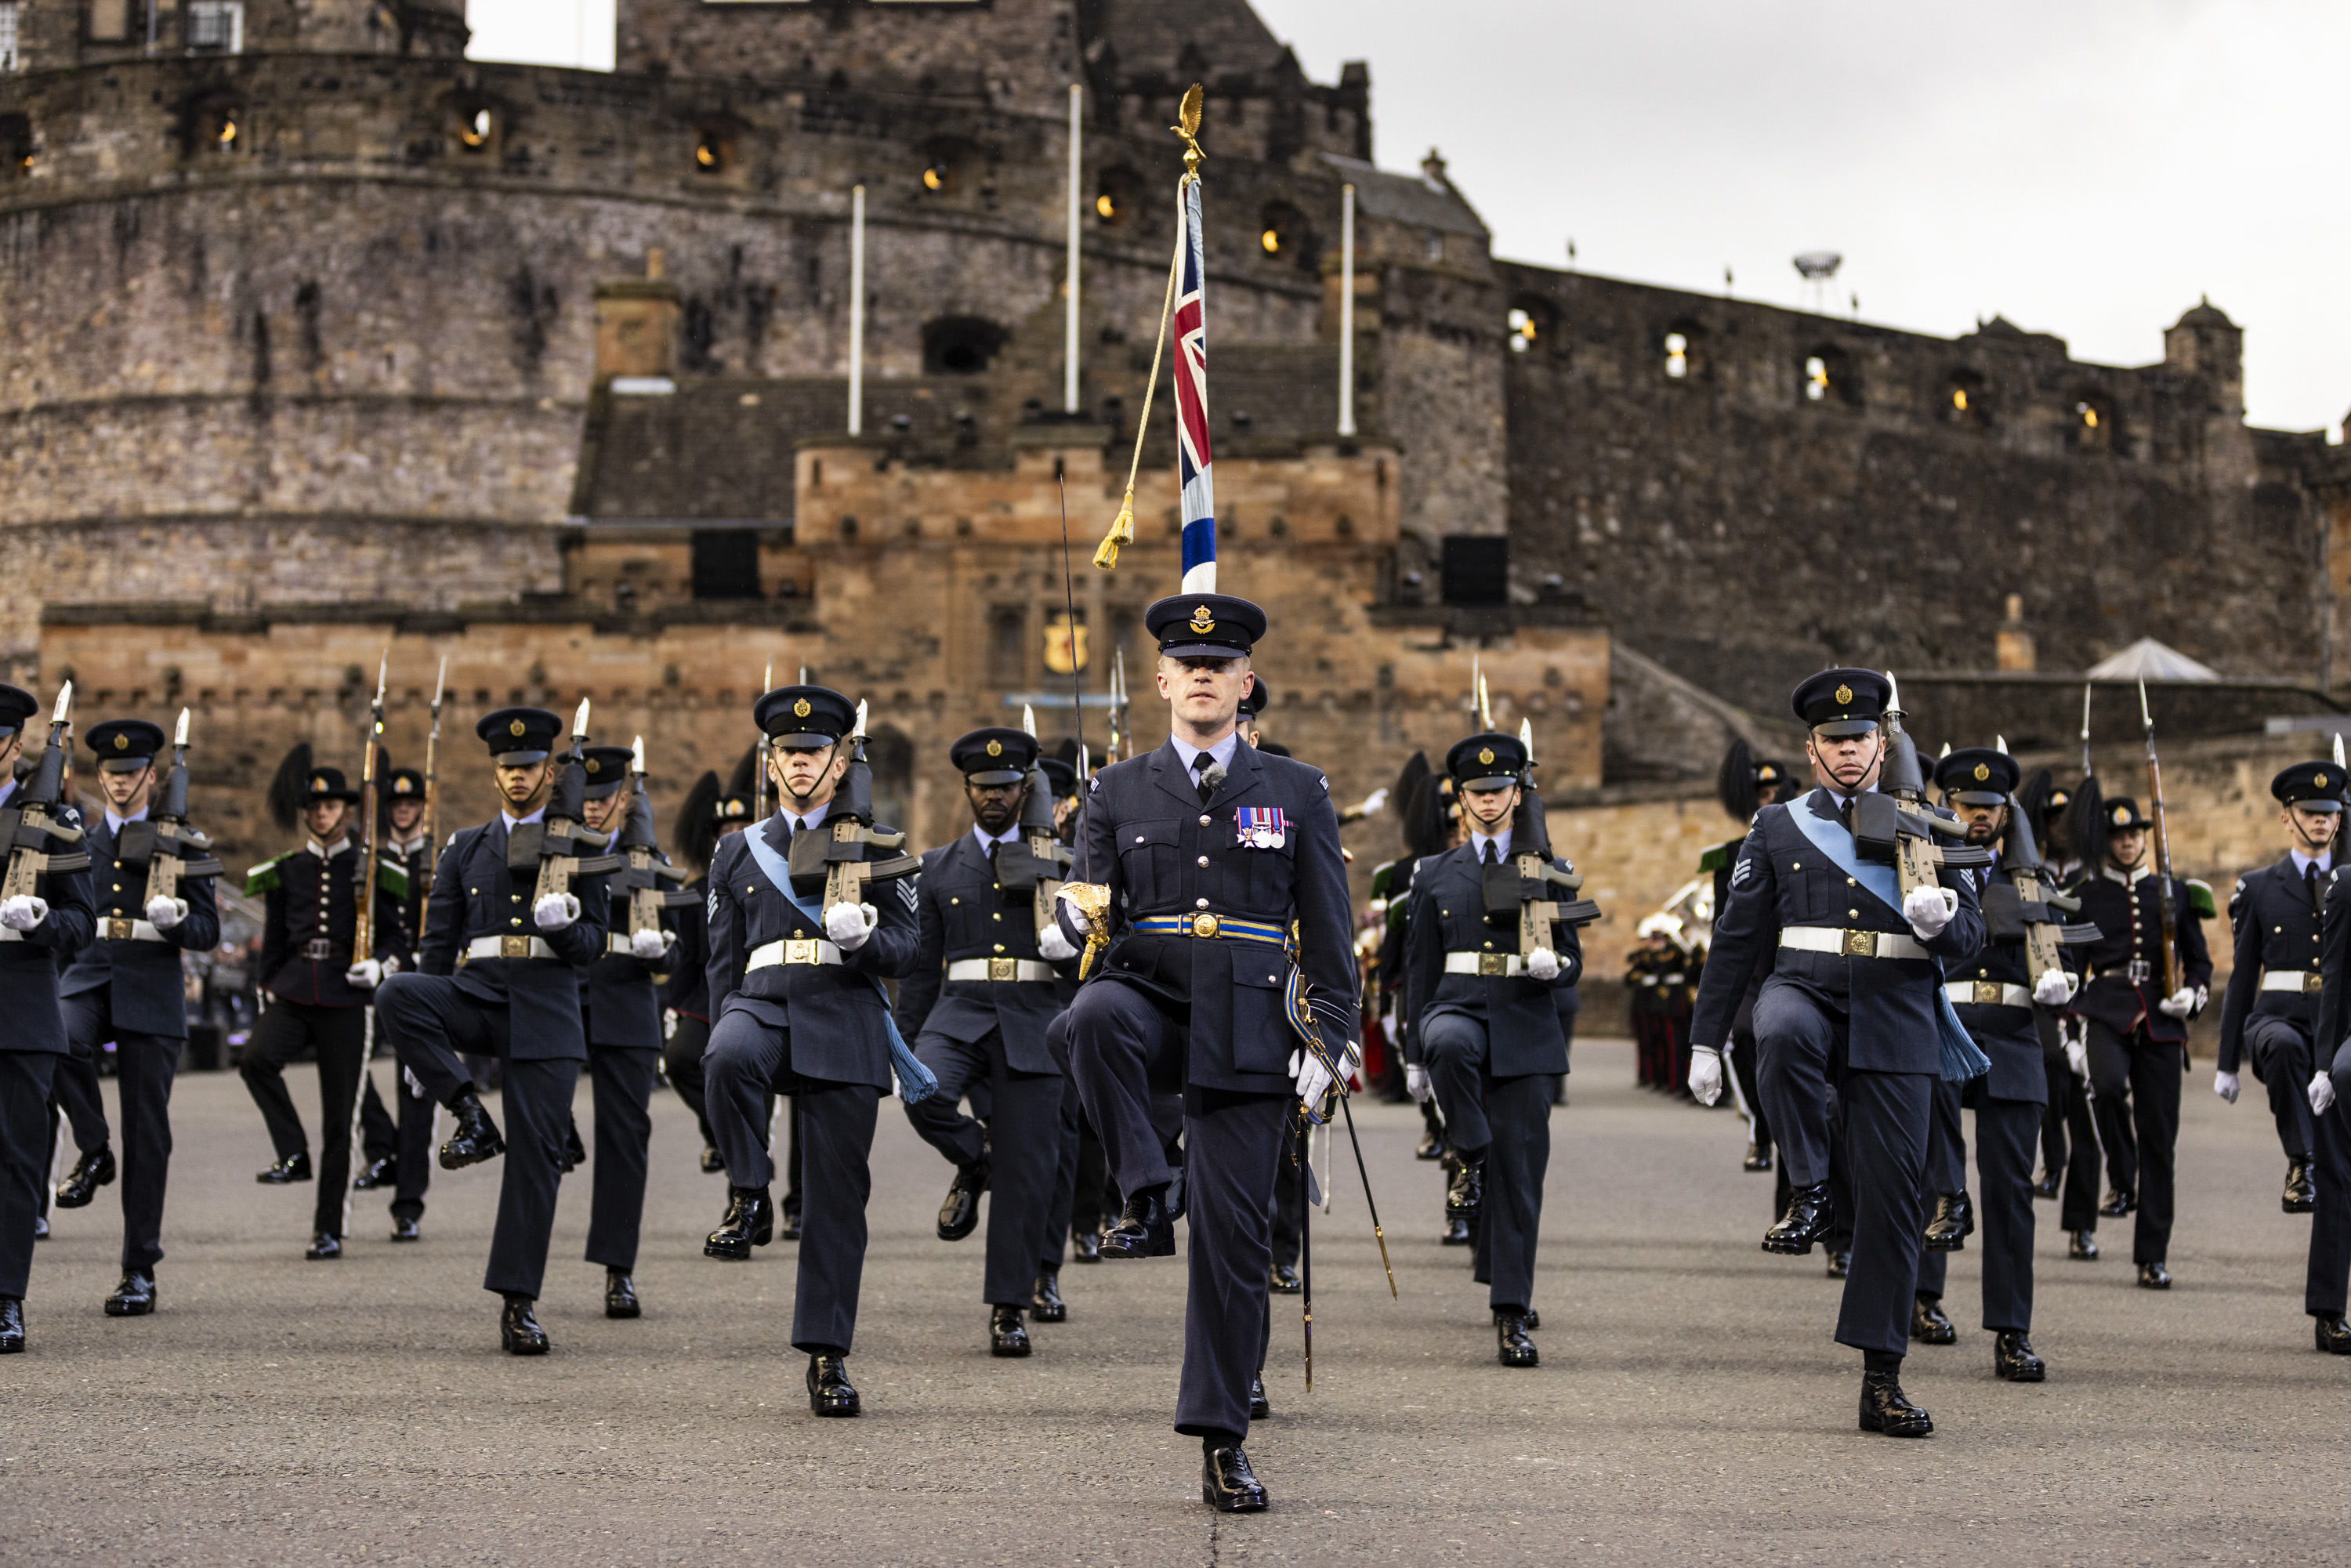 King's Colour Squadron at Edinburgh Castle